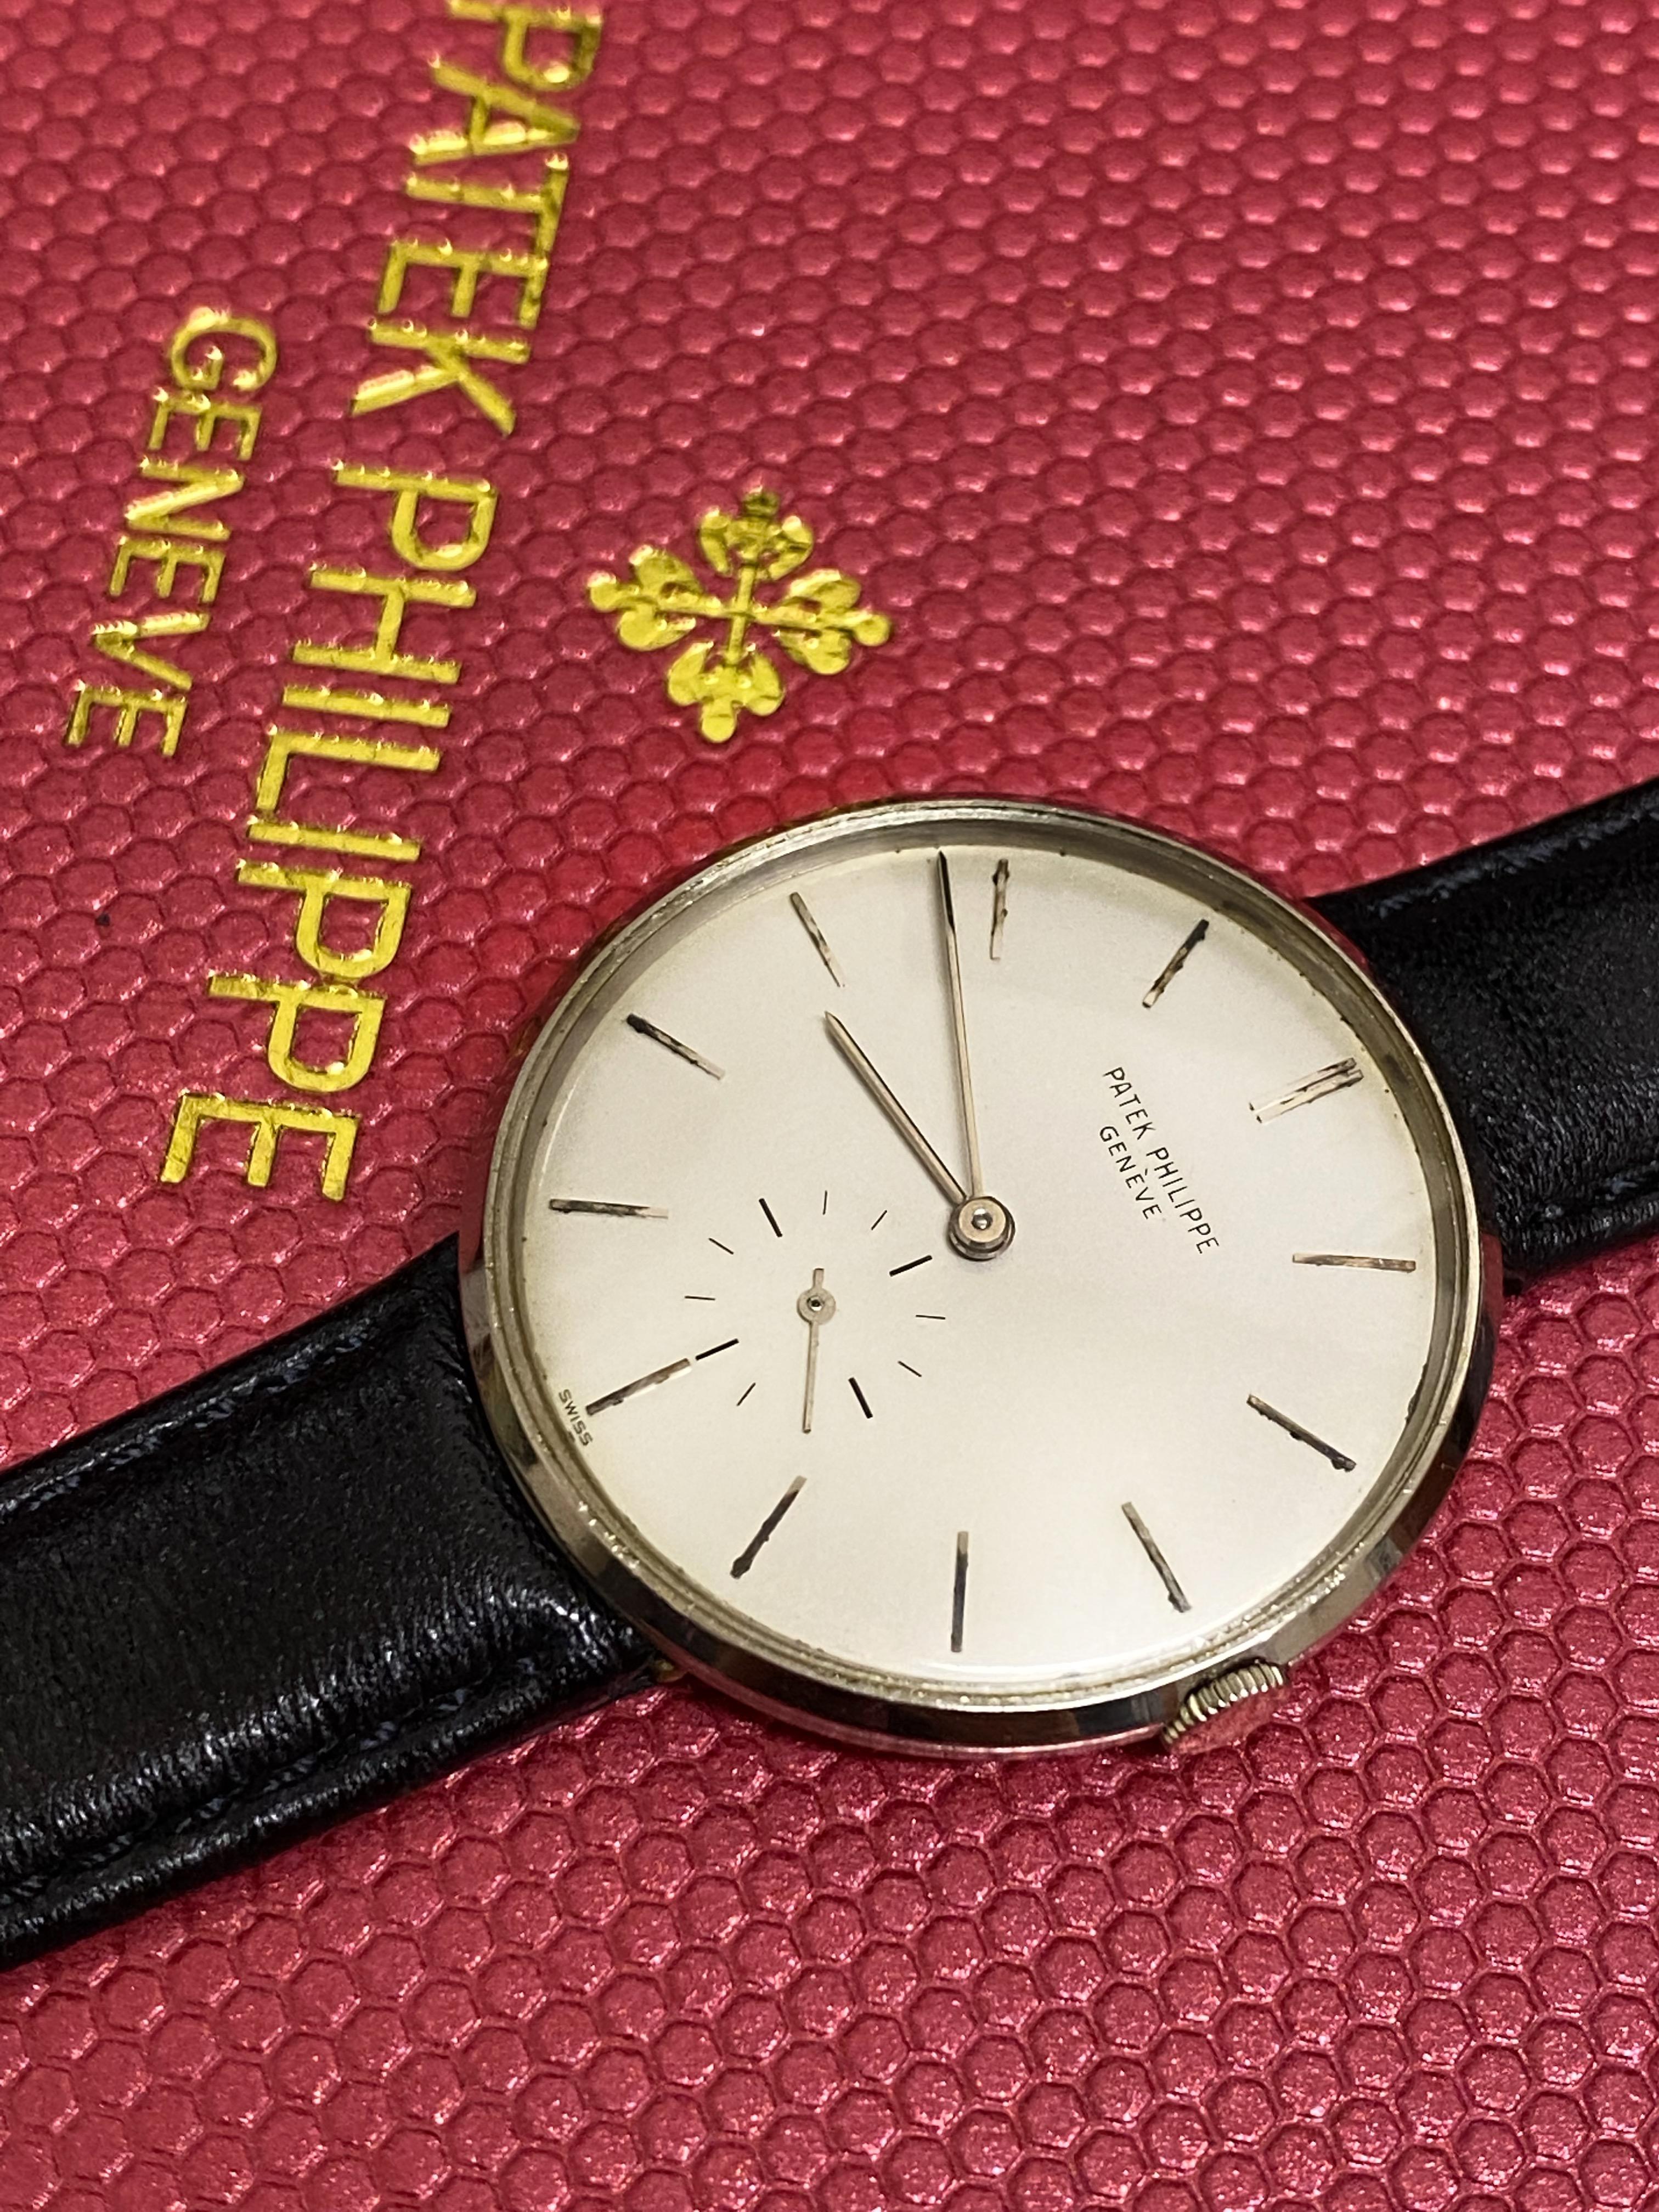 Retro Patek Philippe Ref 3516 18k White Gold Manual Vintage C1964 Mens' Watch + Cert